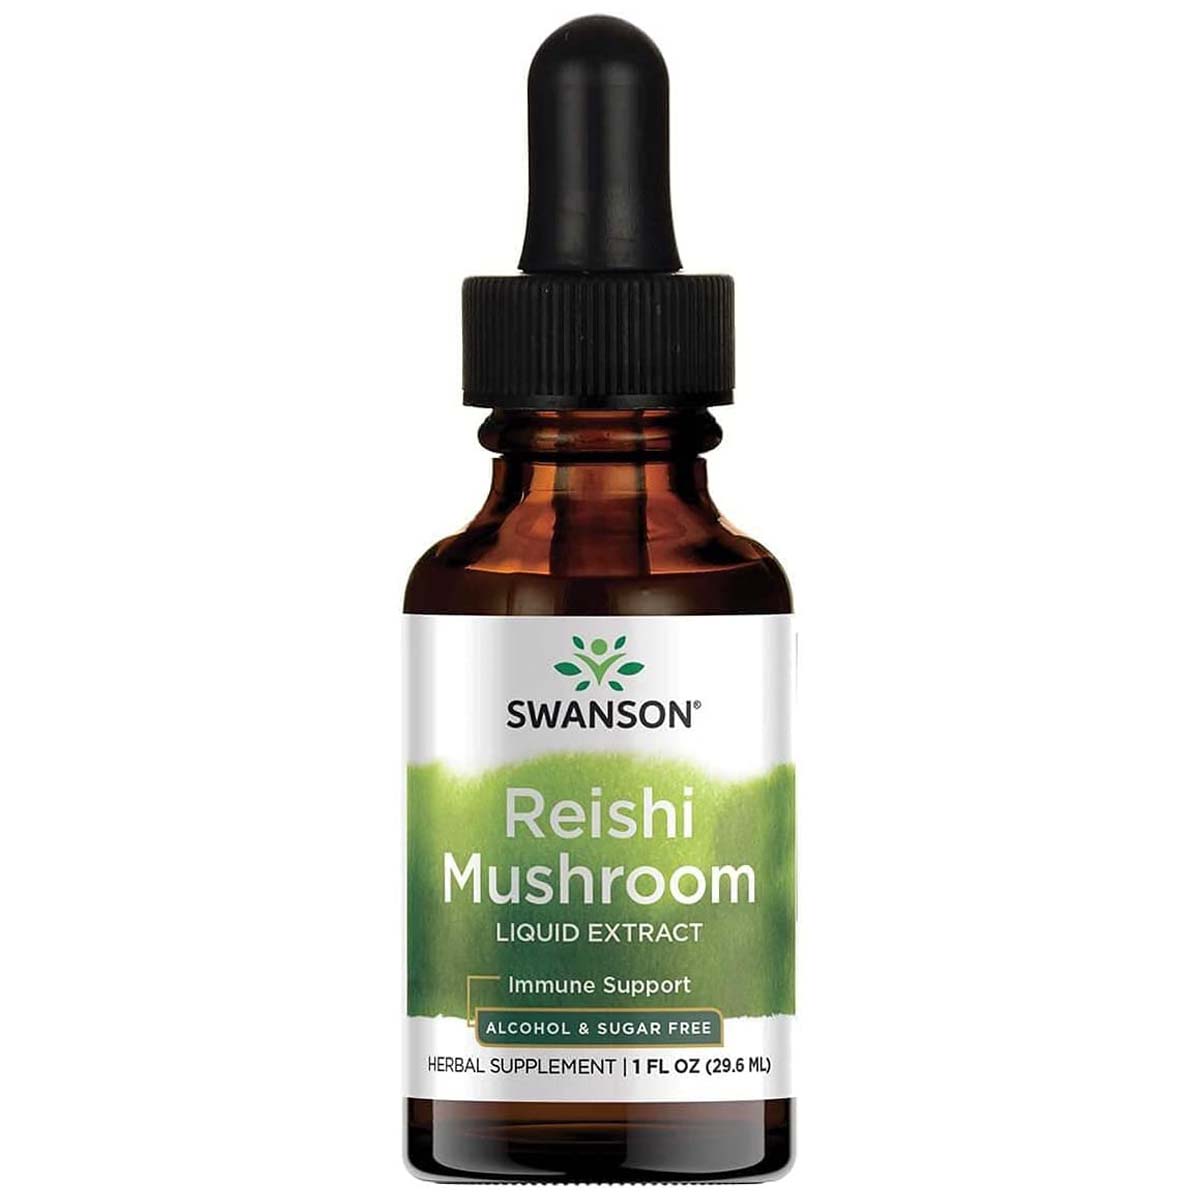 Swanson Reishi Mushroom Liquid Extract, 29.6 ML